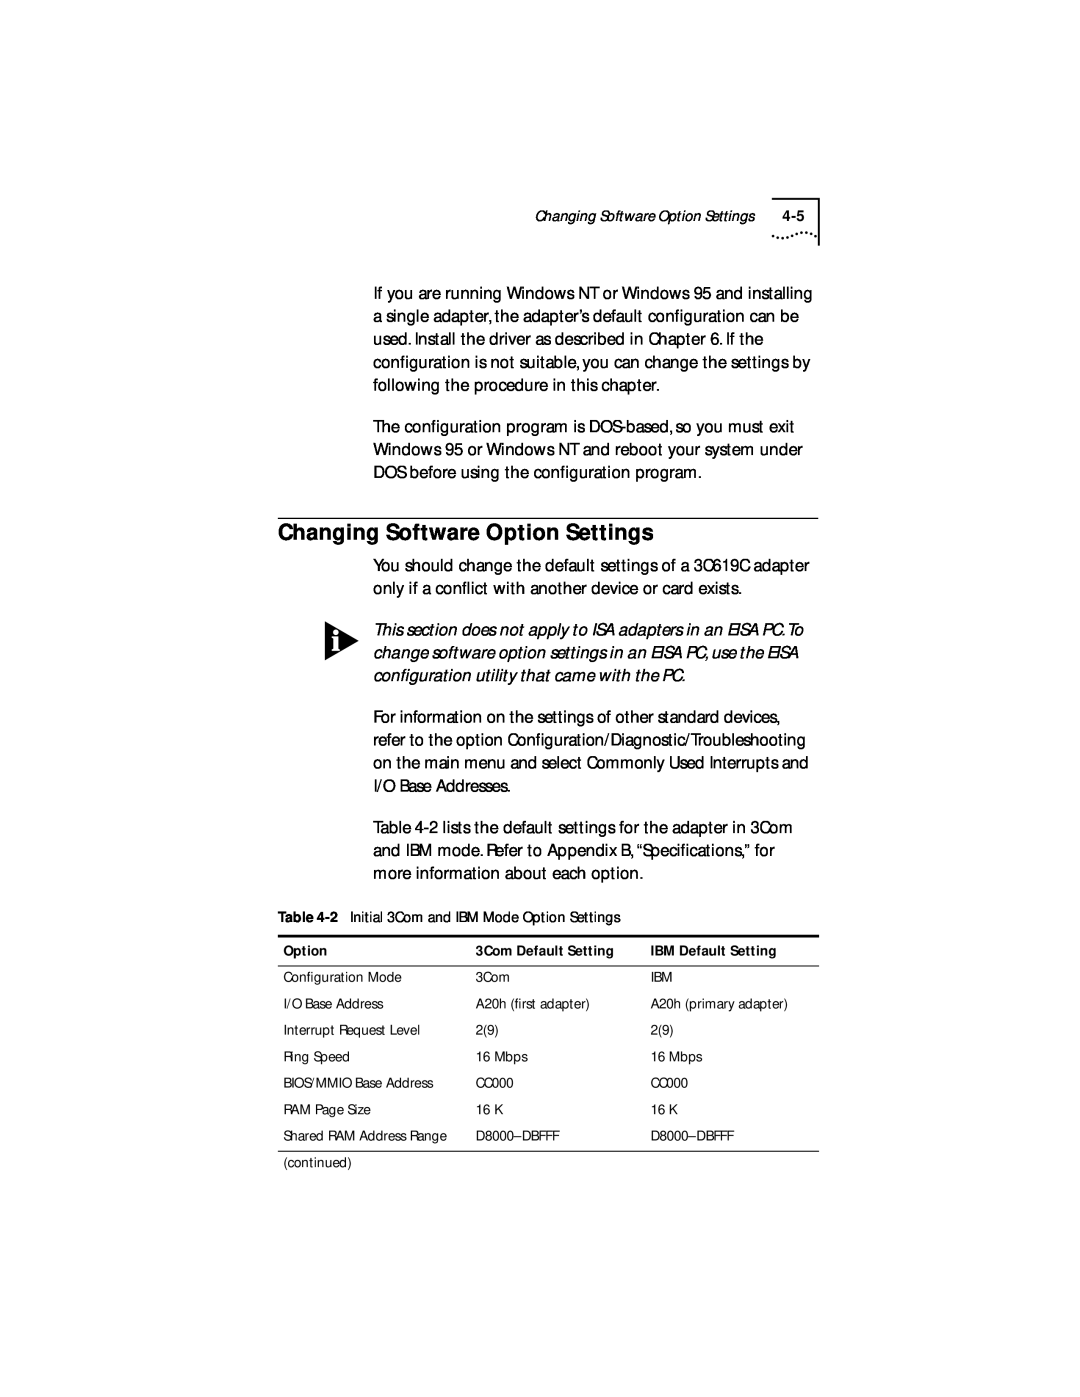 IBM 09-0572-000 manual Changing Software Option Settings, BIOS/MMIO Base Address 